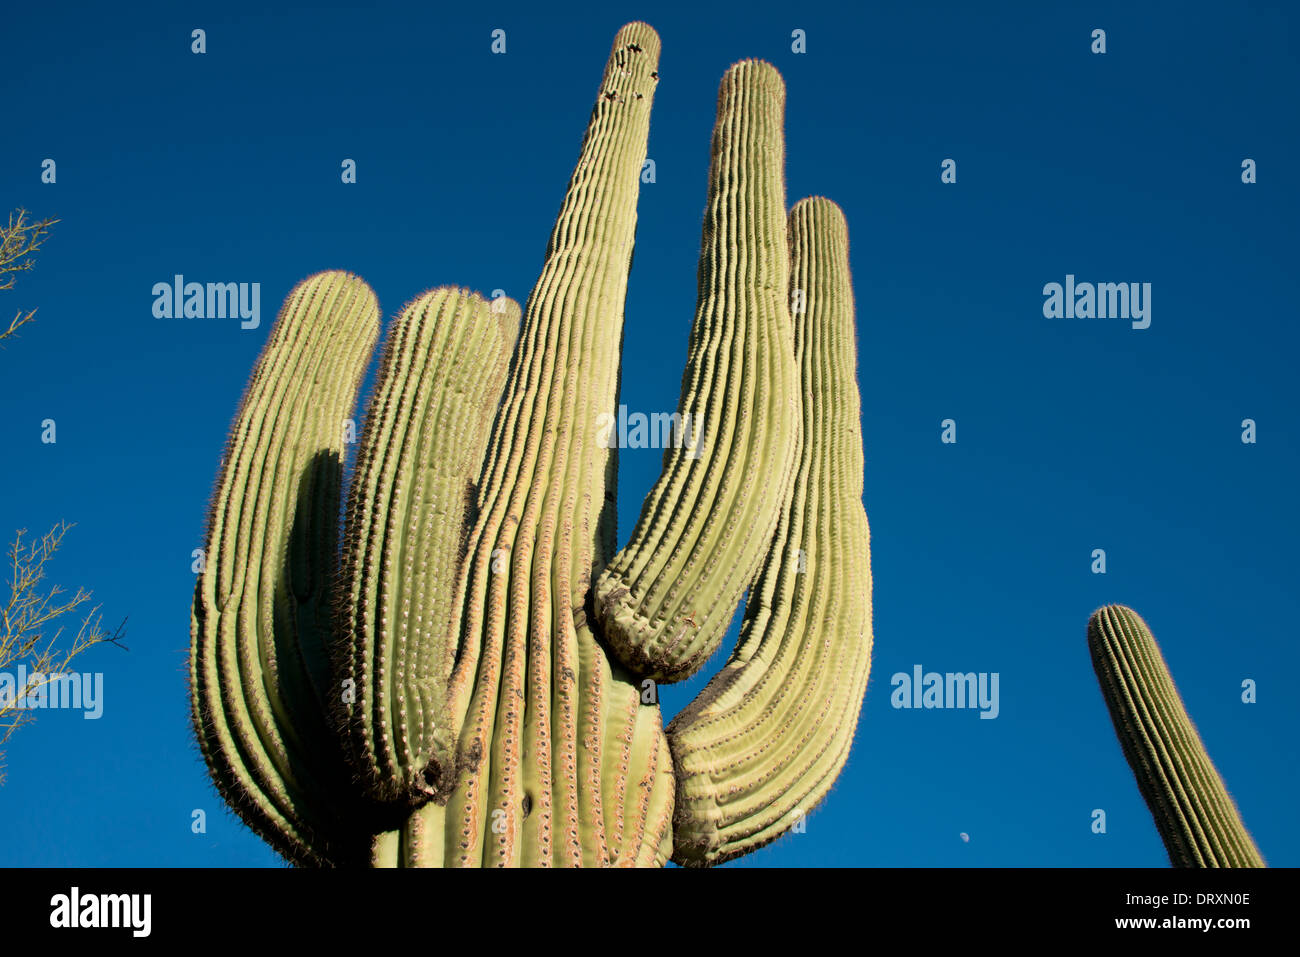 Arizona, Tucson, Saguaro National Park. Giant Saguaro cactus (Carnegiea gigantea). Stock Photo